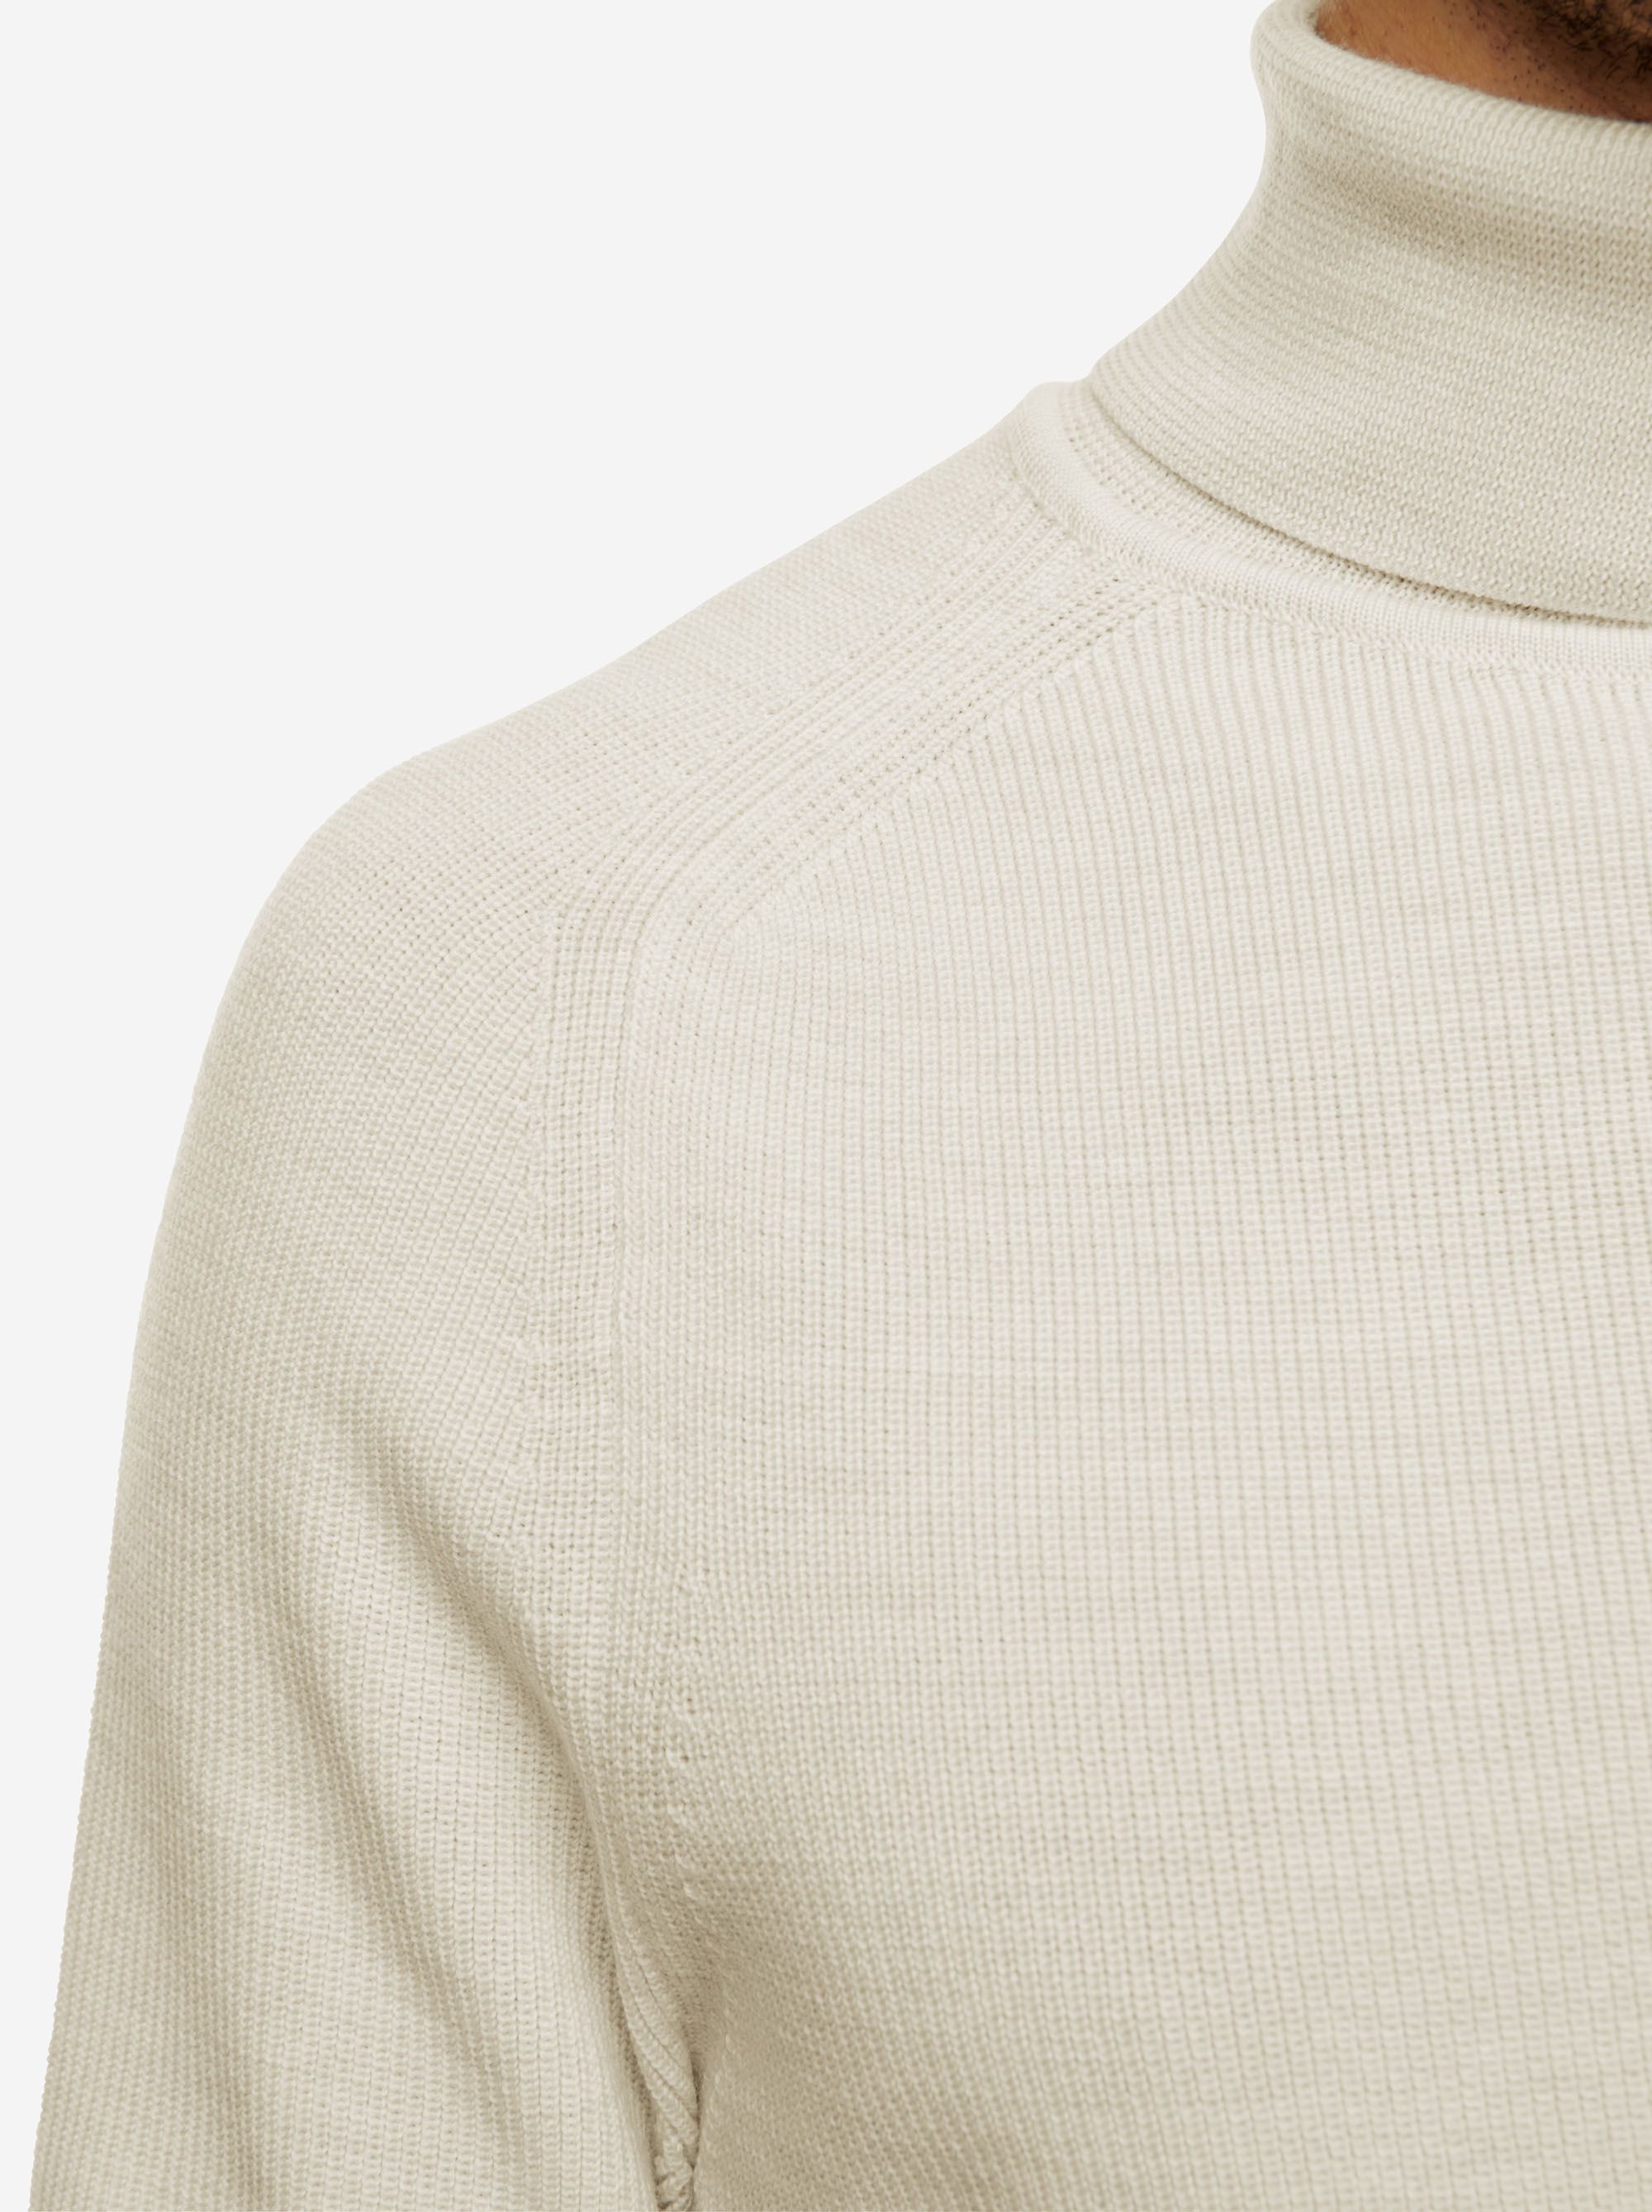 Teym - Turtleneck - The Merino Sweater - Men - White - 4